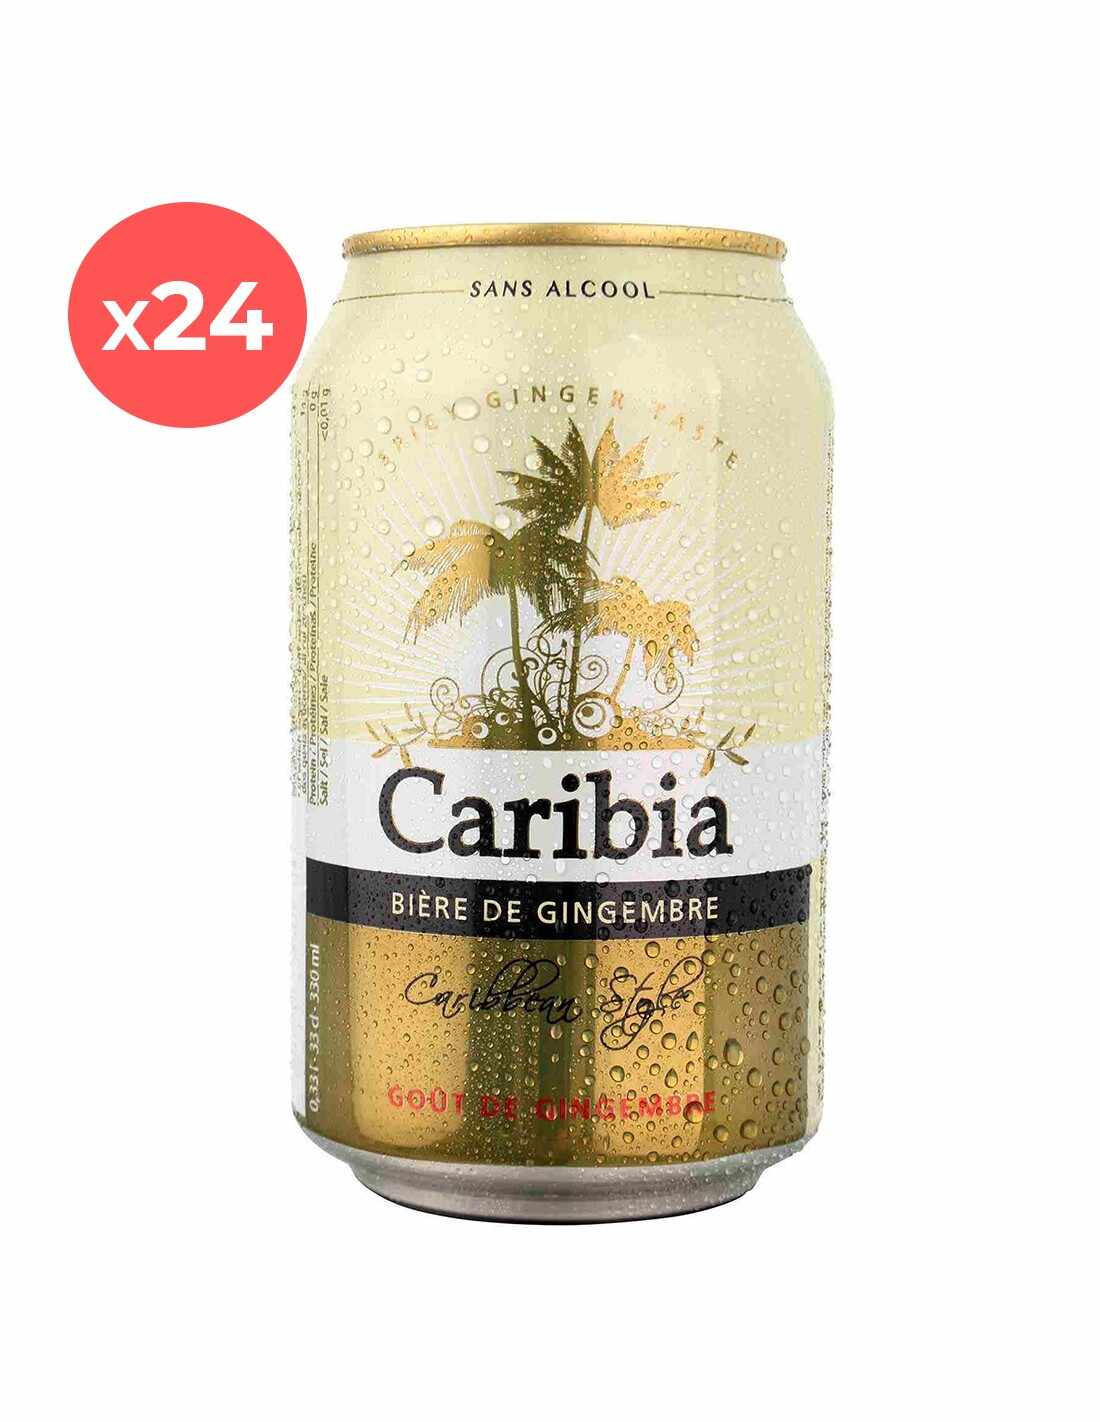 Bax 24 bucati bere blonda, fara alcool, Caribia Ginger, 0% alc., 0.33L, doza, Danemarca